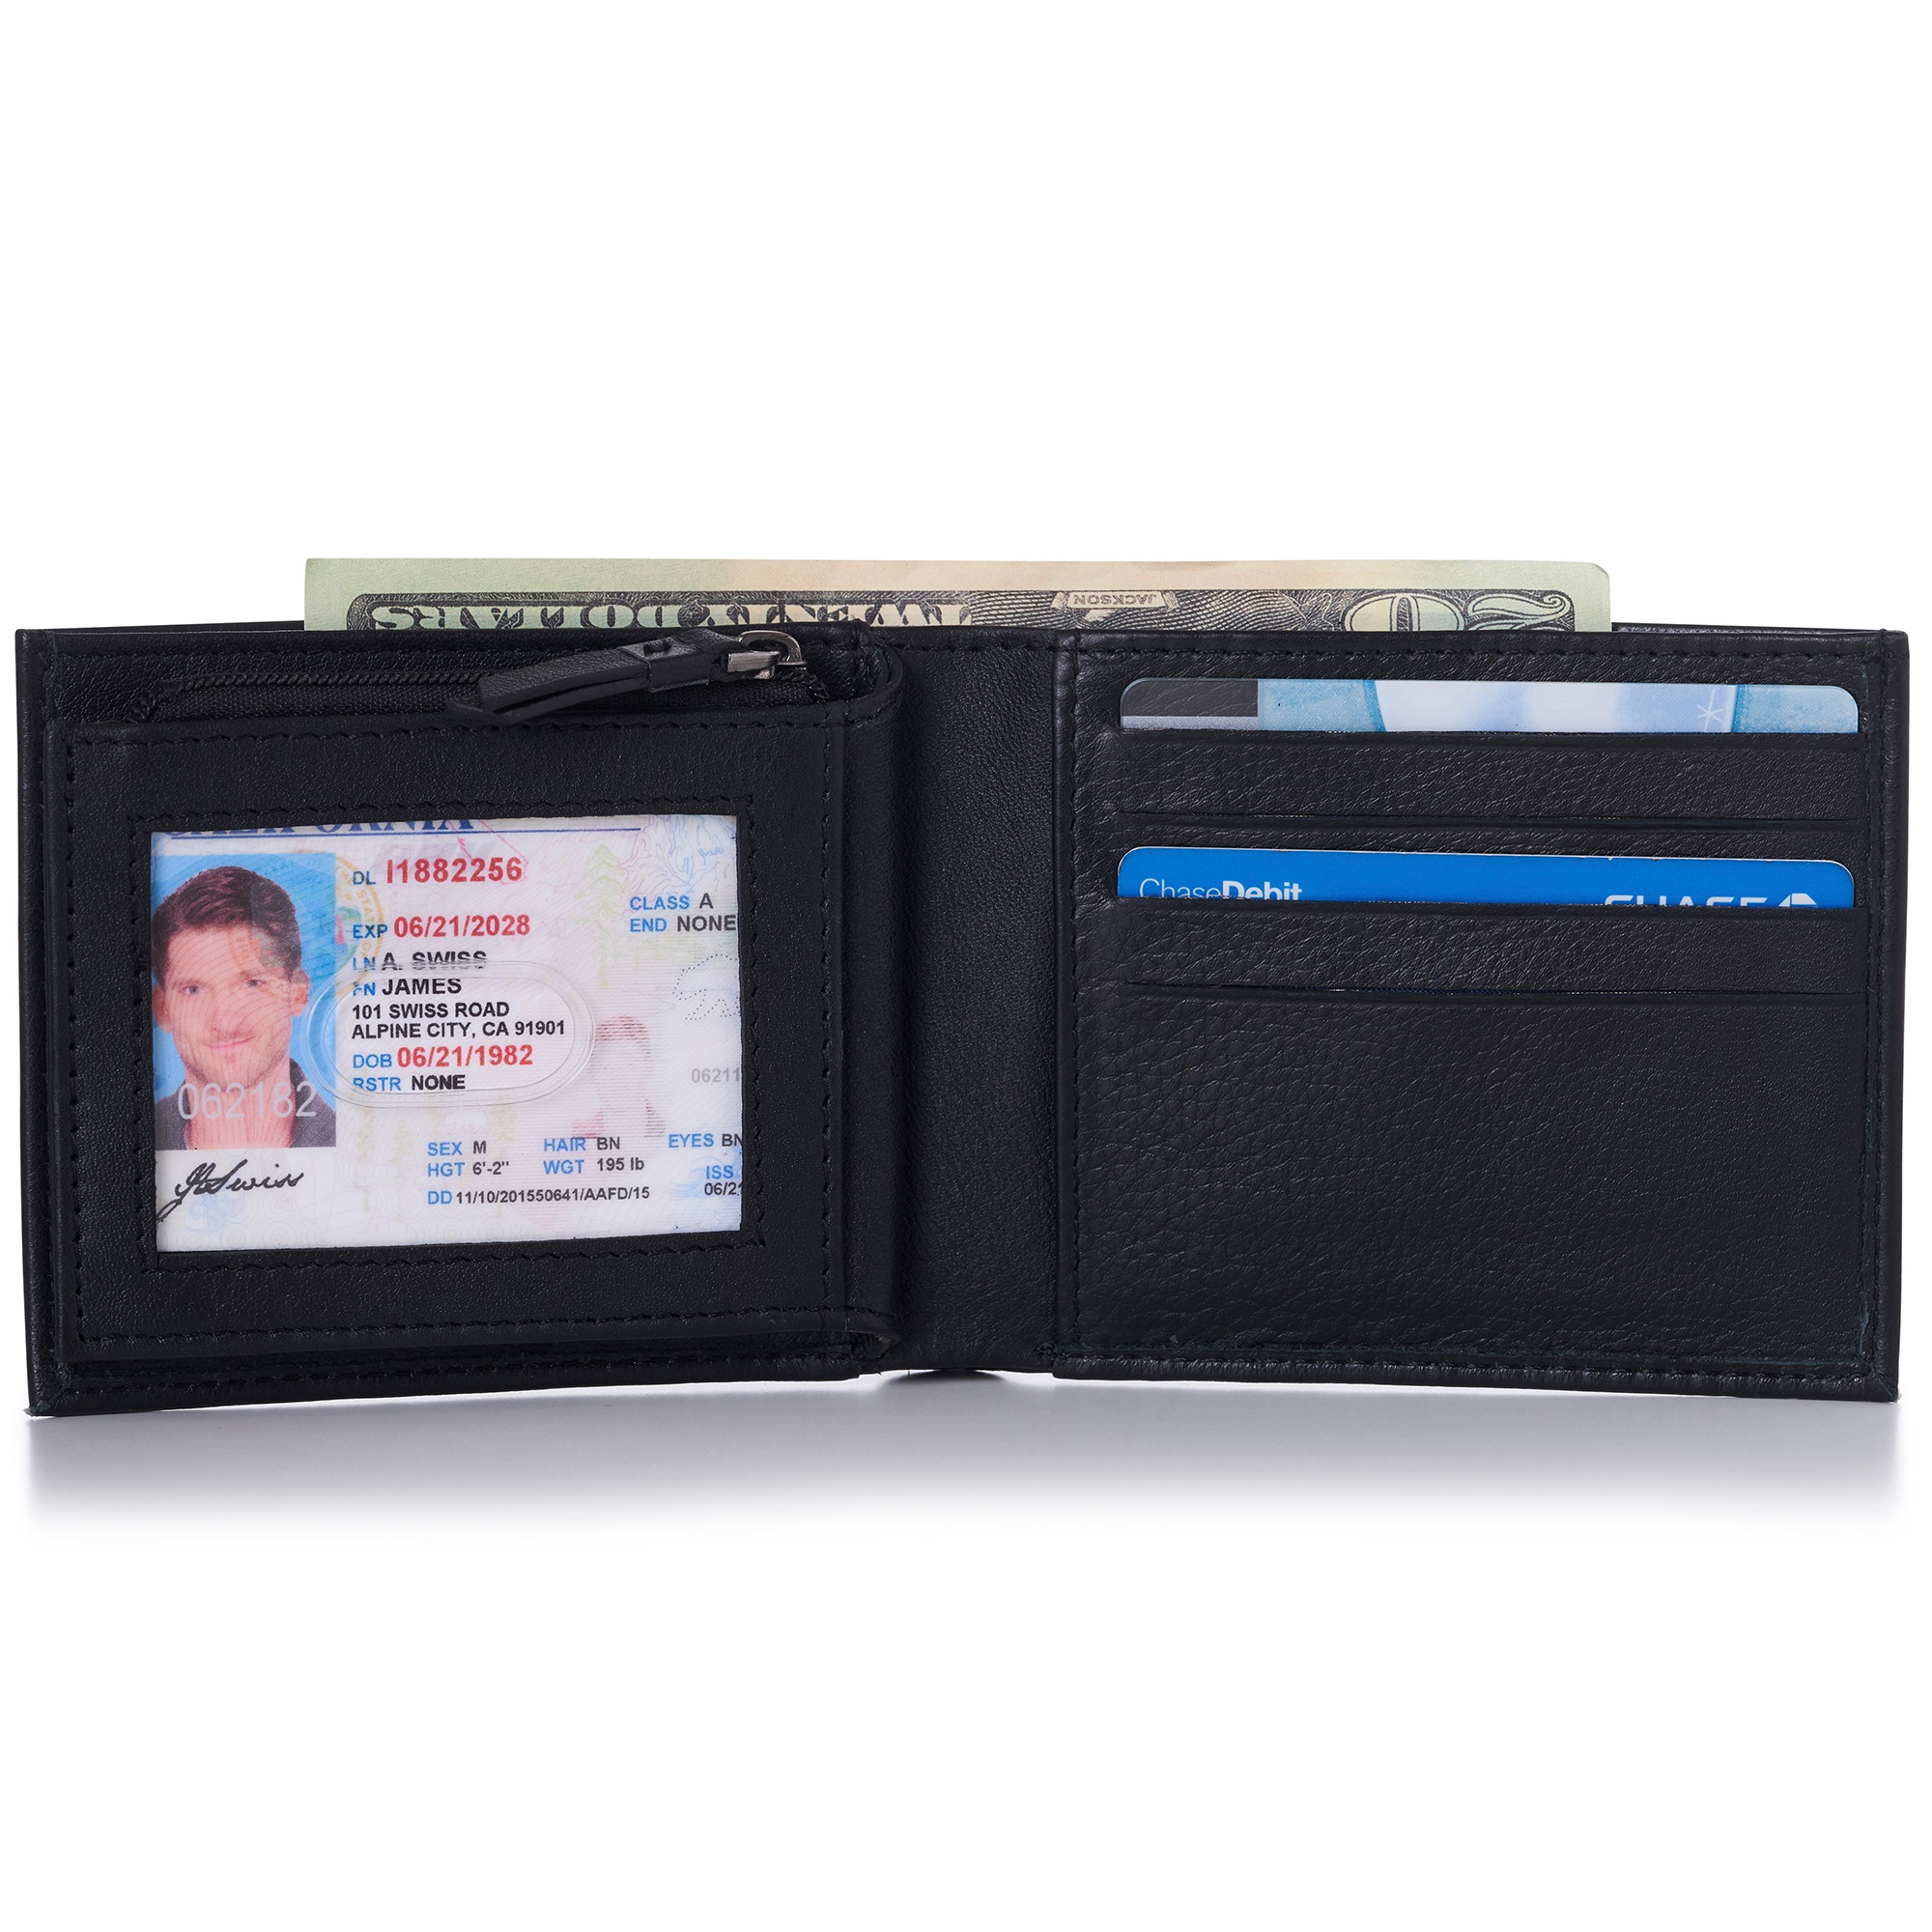 Alpine Swiss Double Diamond RFID Thin Card Holder Wallet